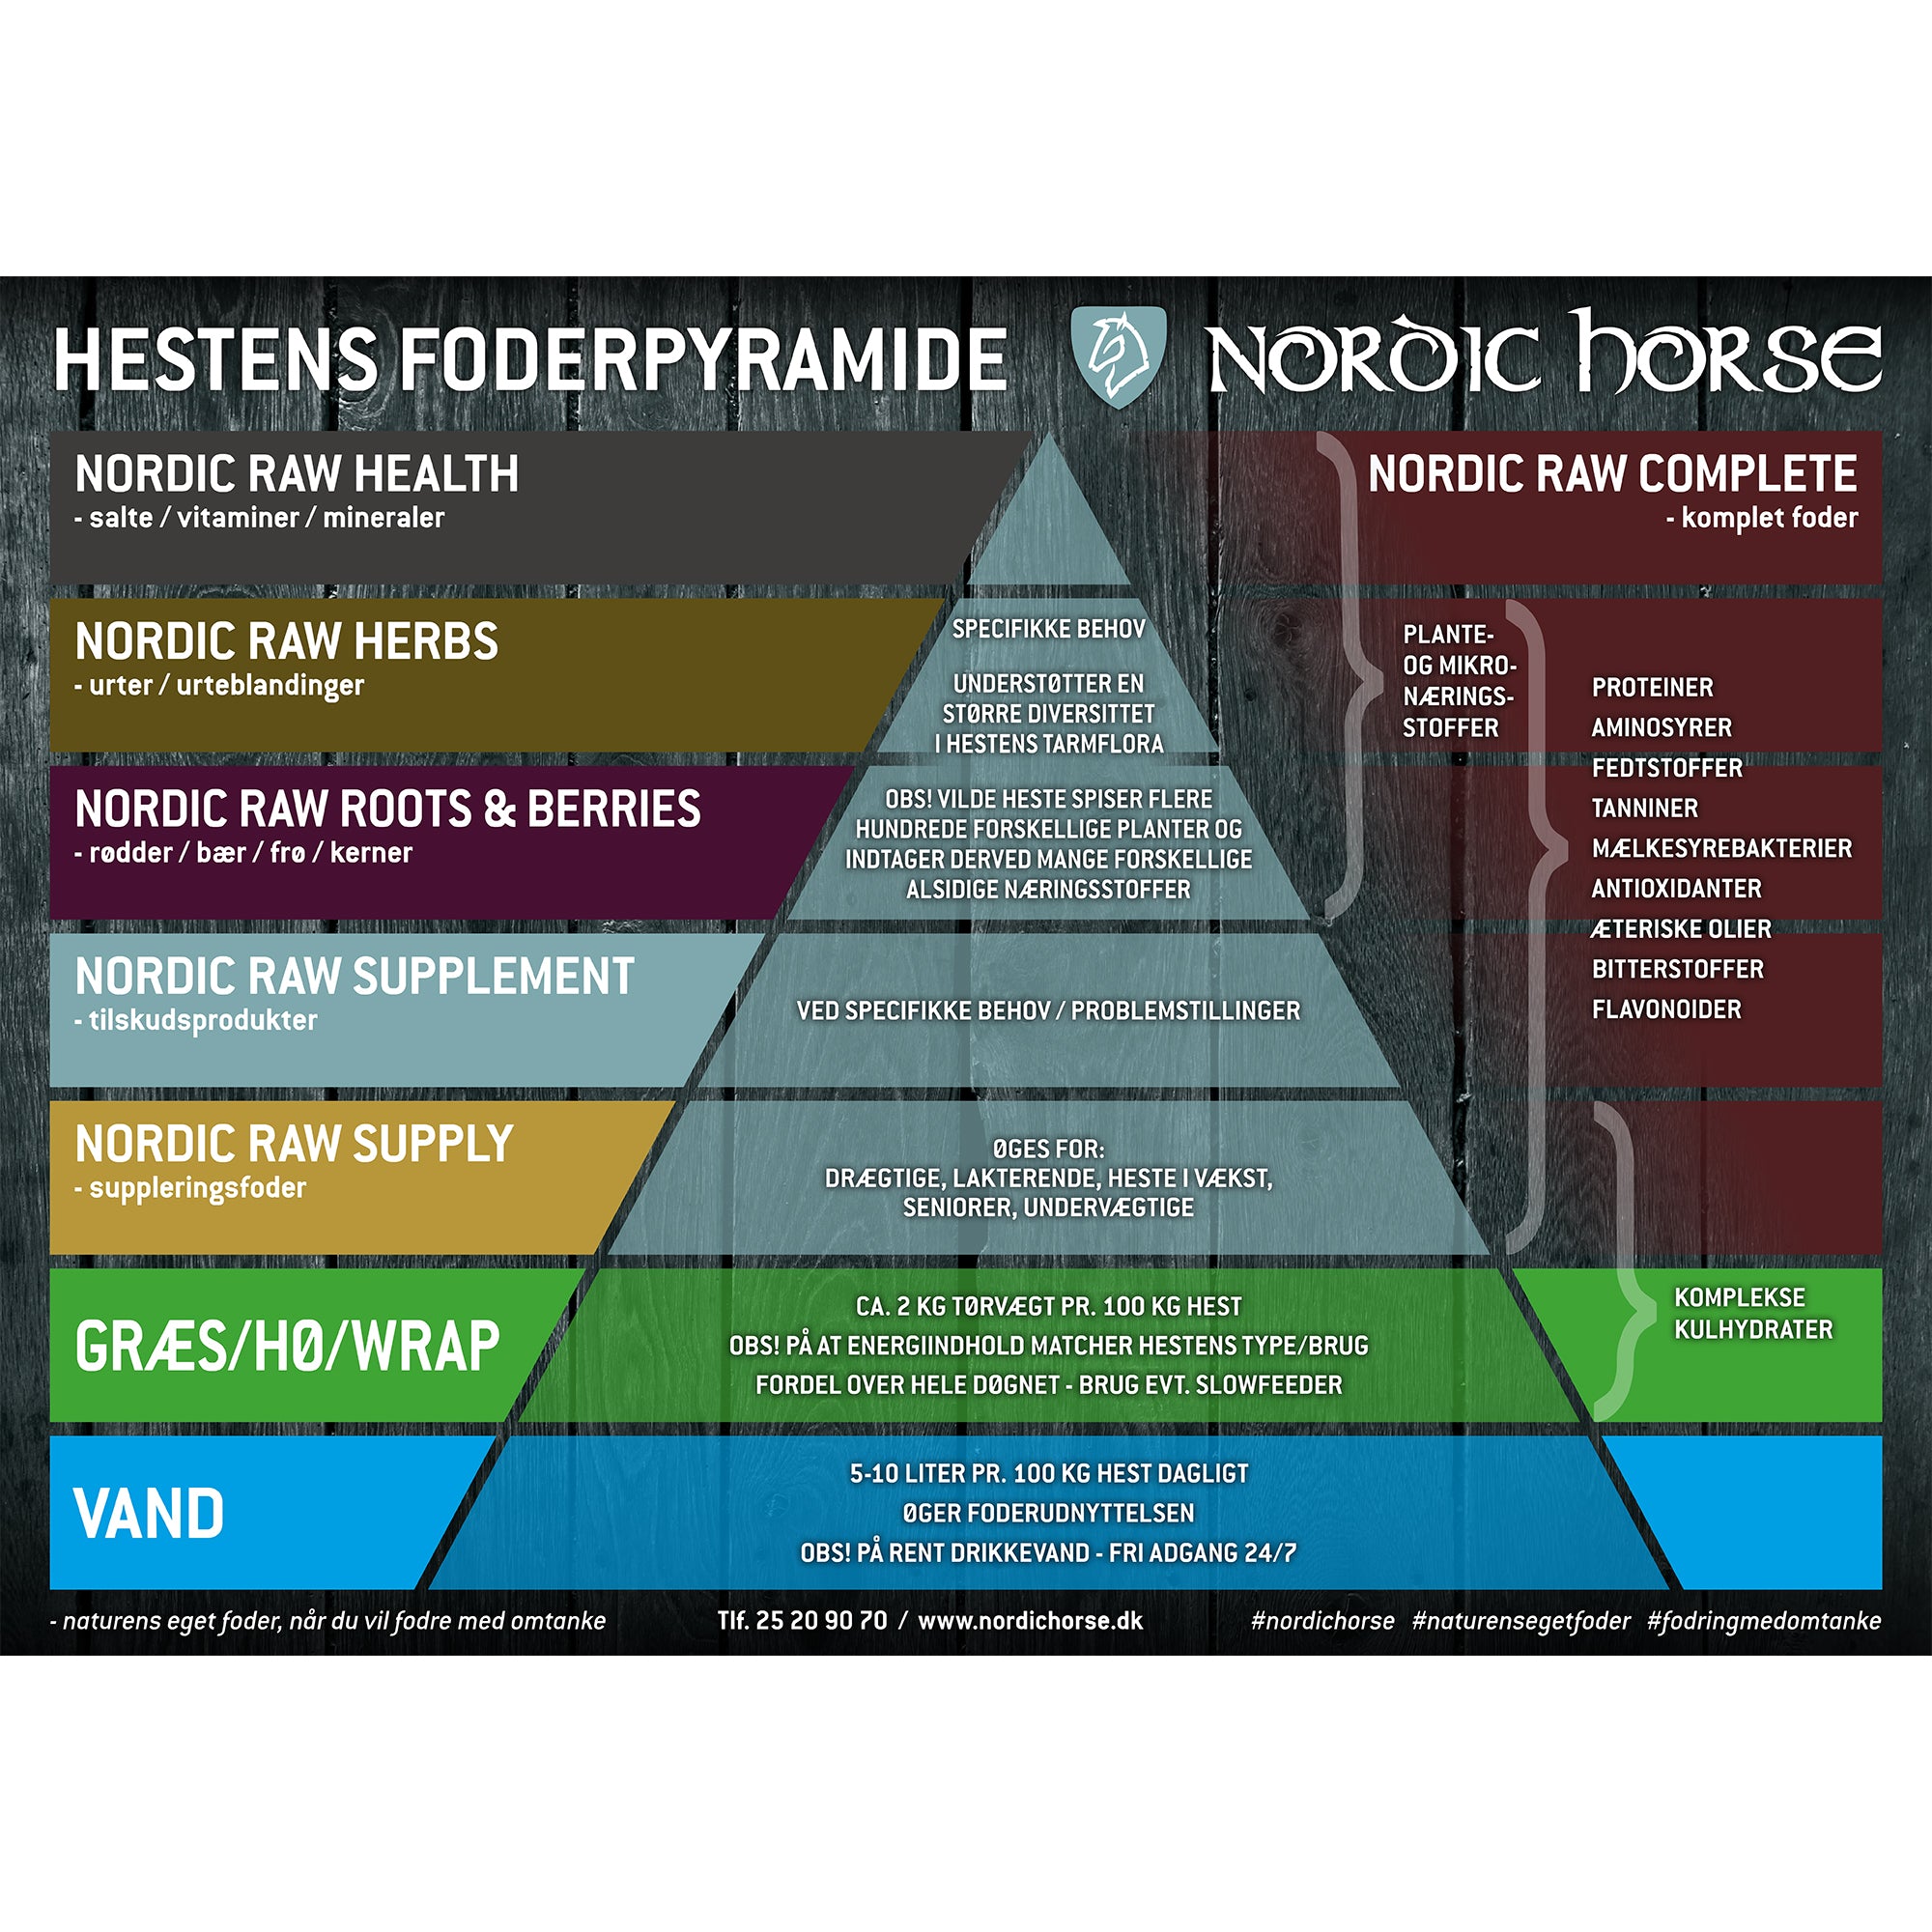 Nordic Horse Foderpyramide